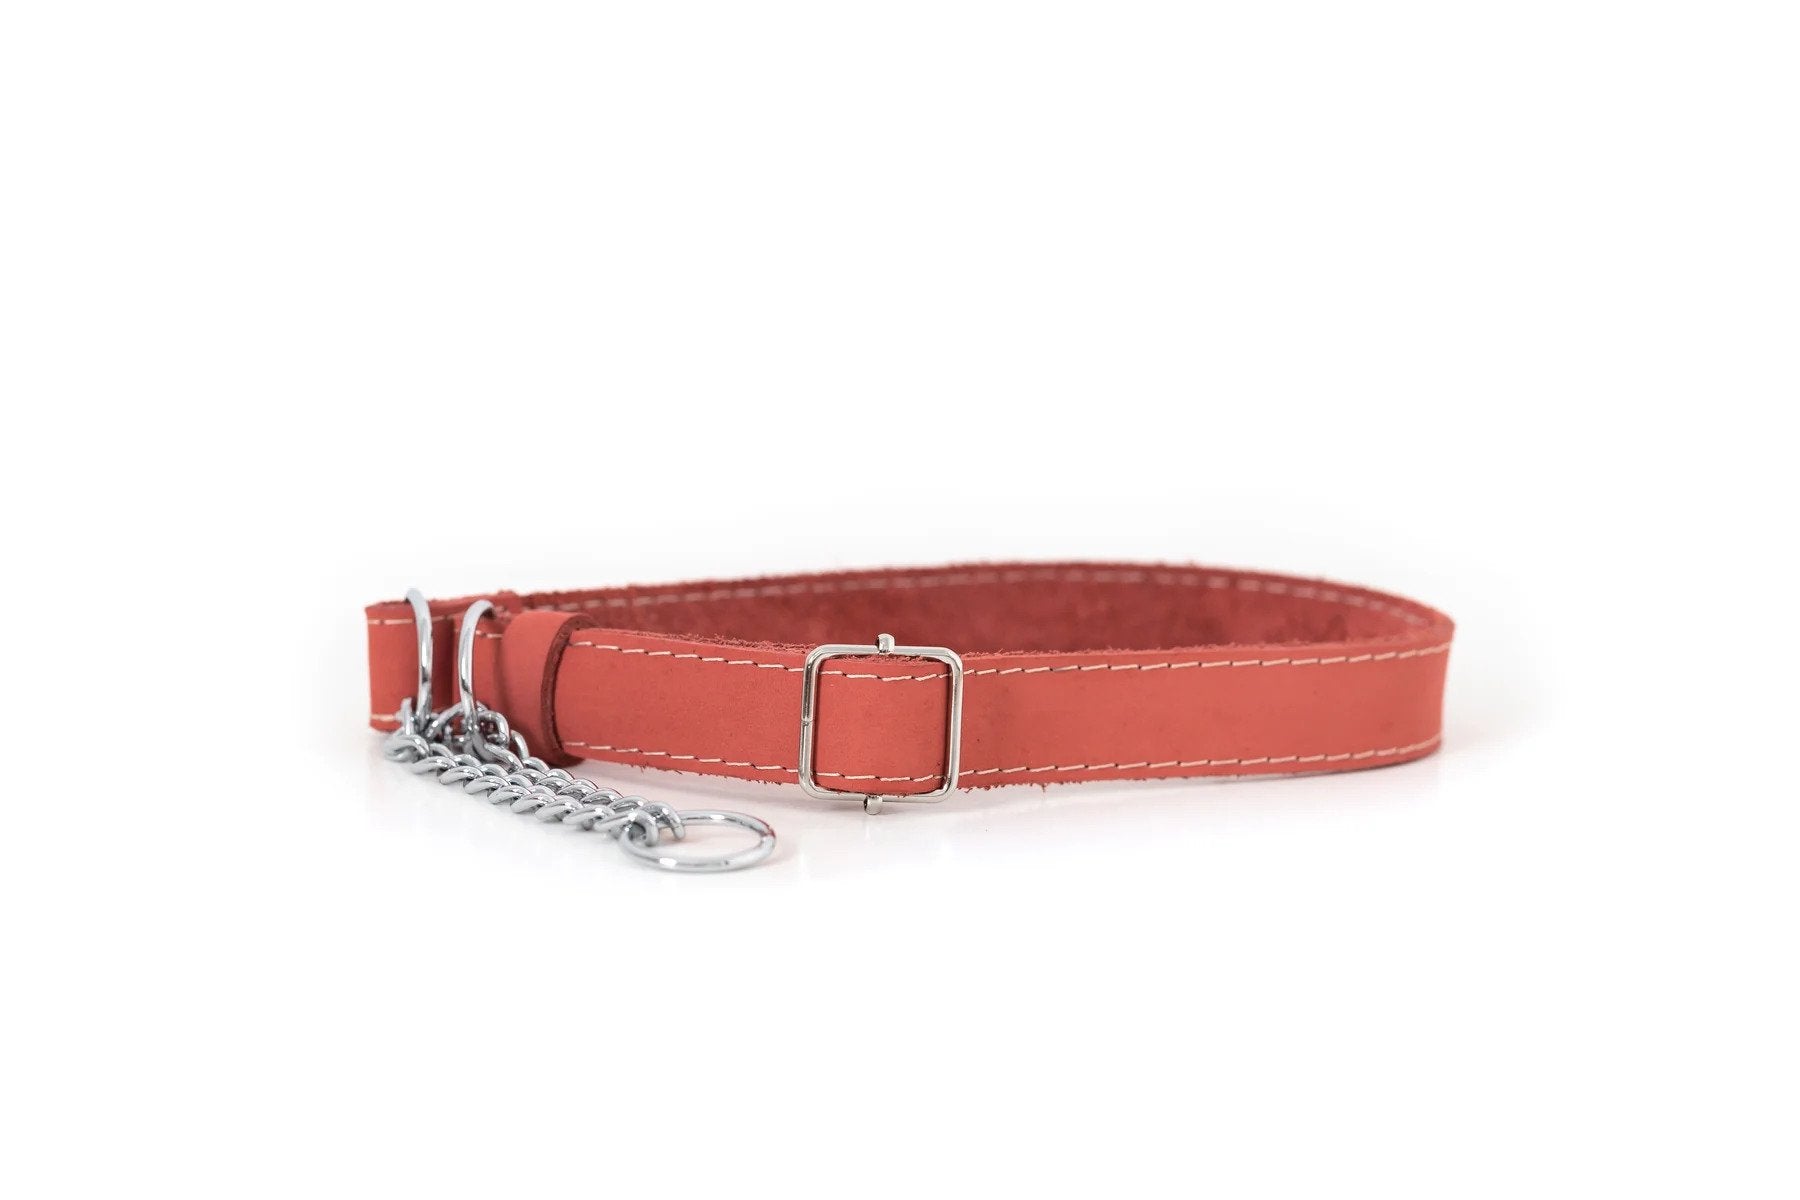 Eurodog Collars Martingale Leather Dog Collar